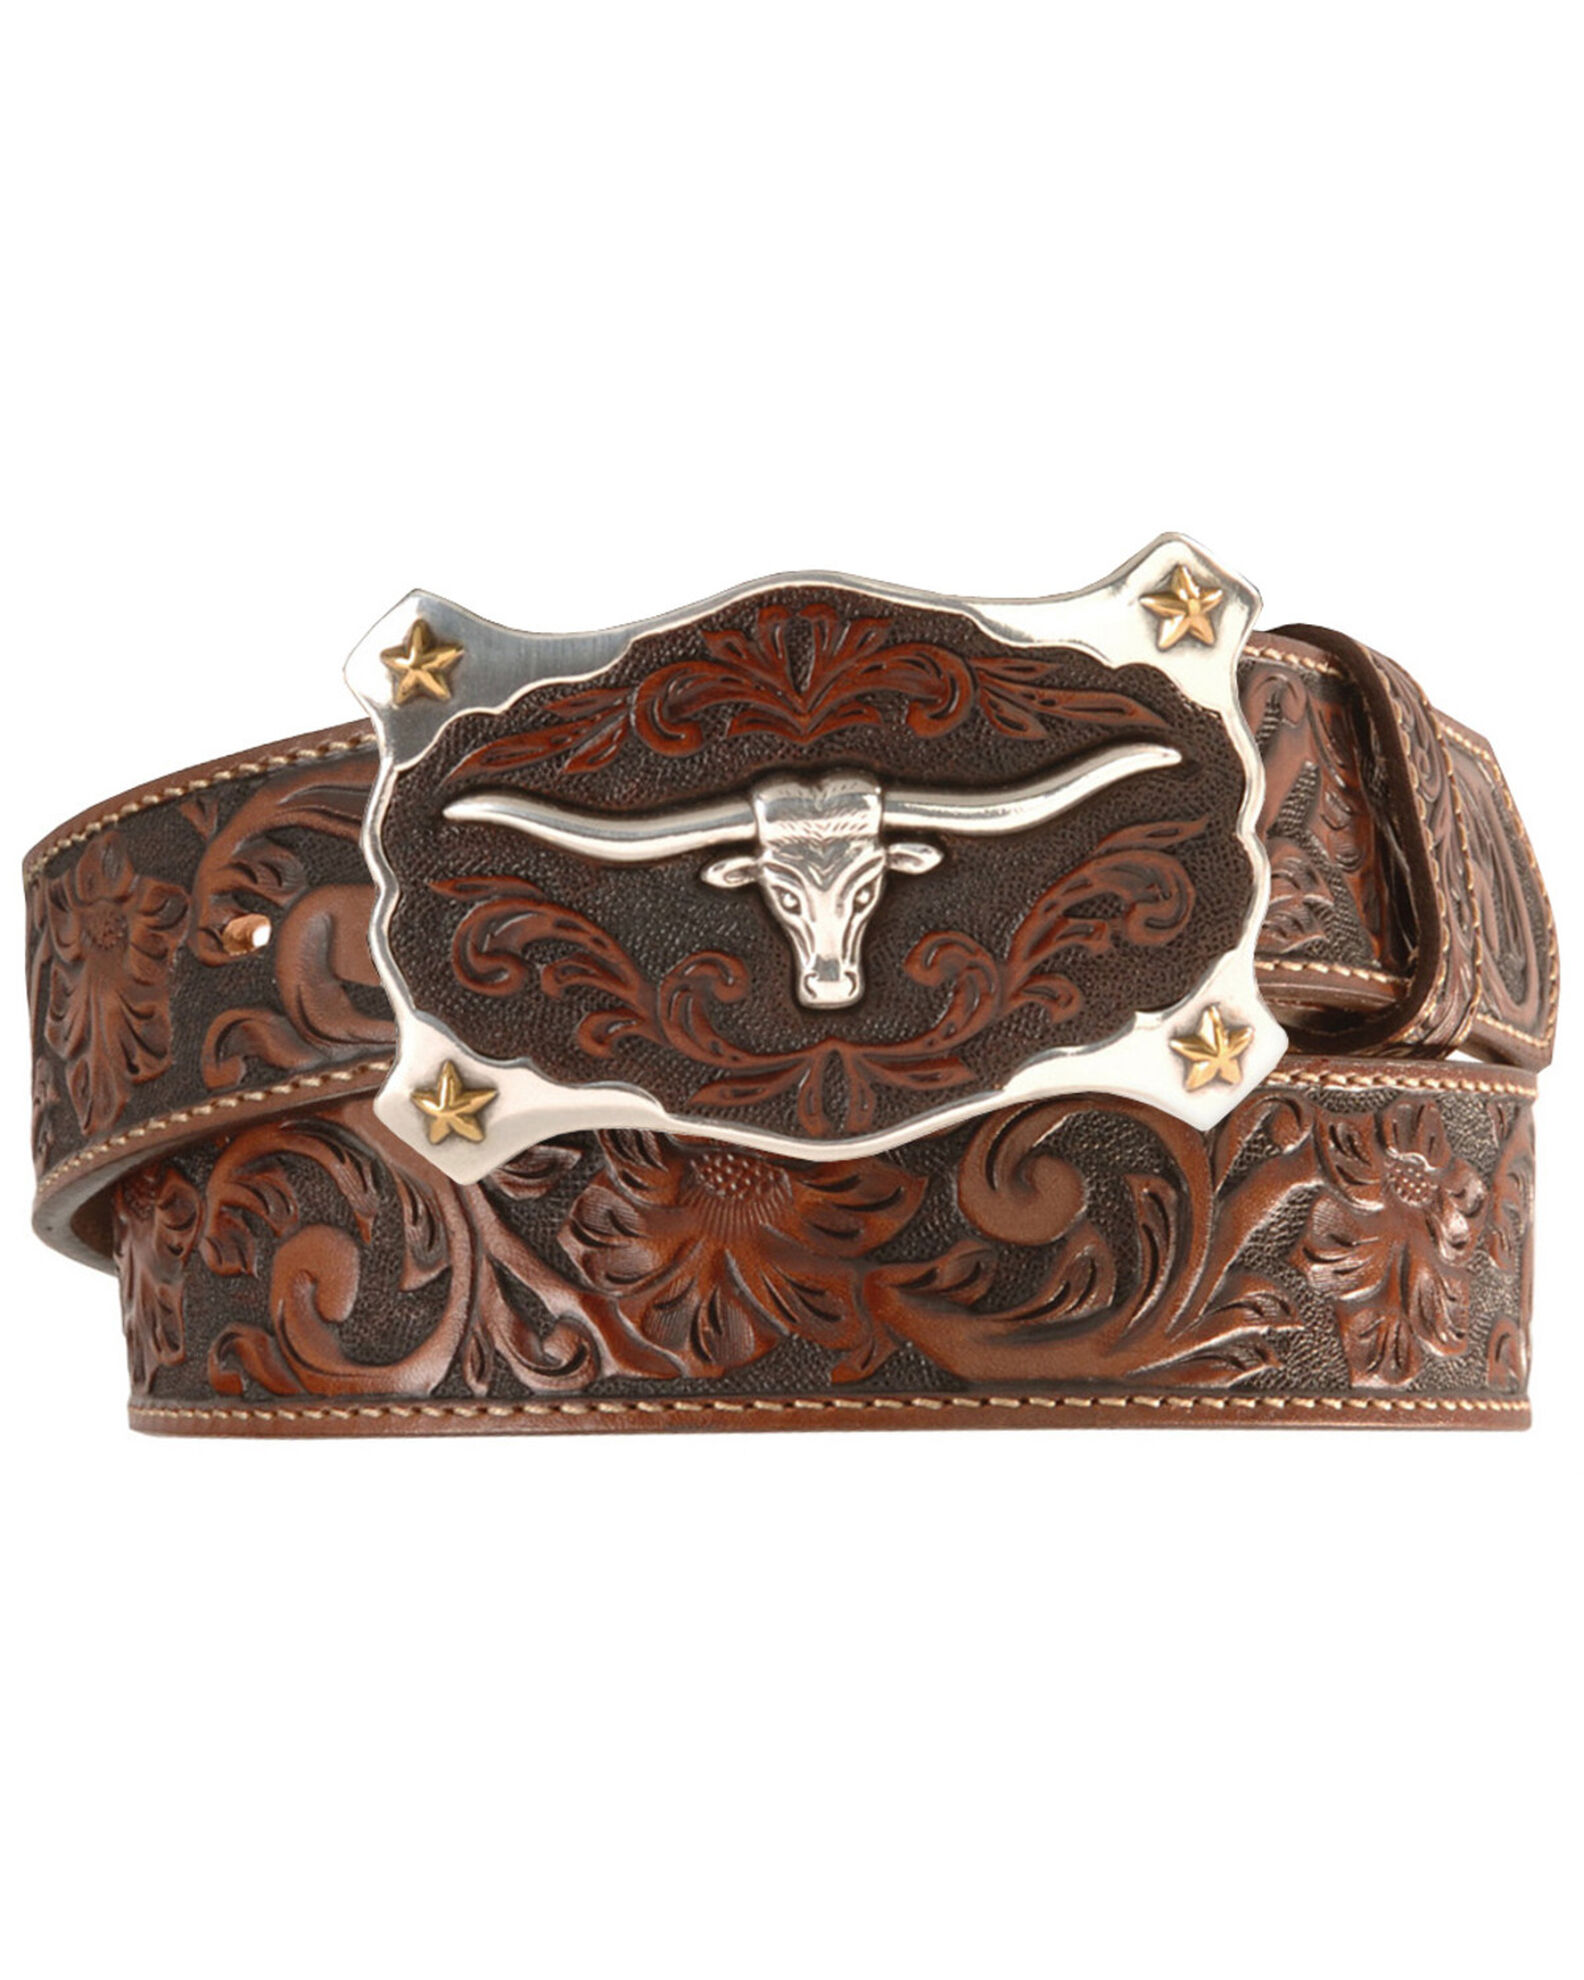 Product Name: Justin Men's Longhorn Buckle Leather Belt